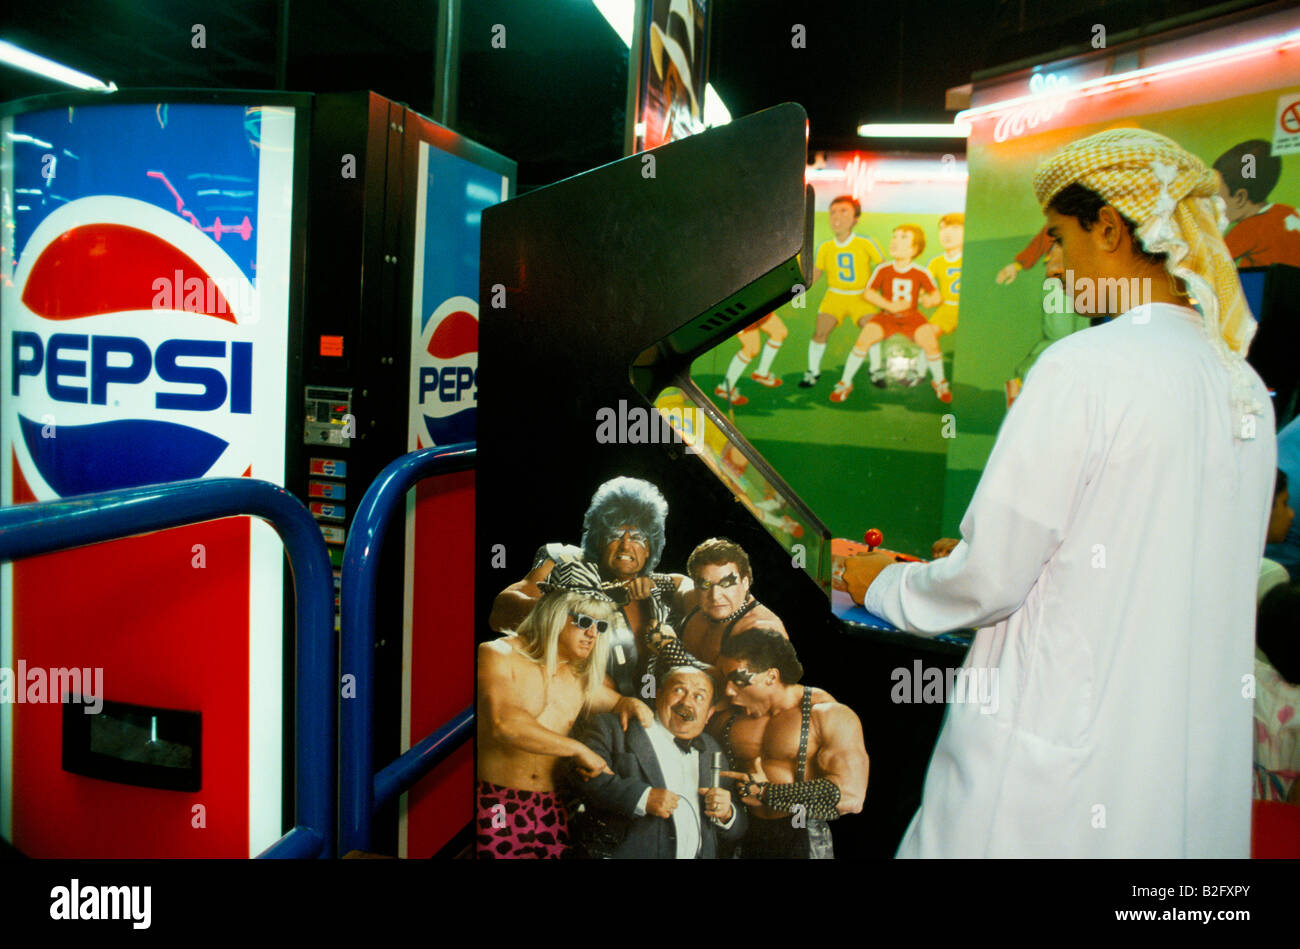 a youth wearing kandura plays arcade game in sinbads amusment centre dubai Stock Photo